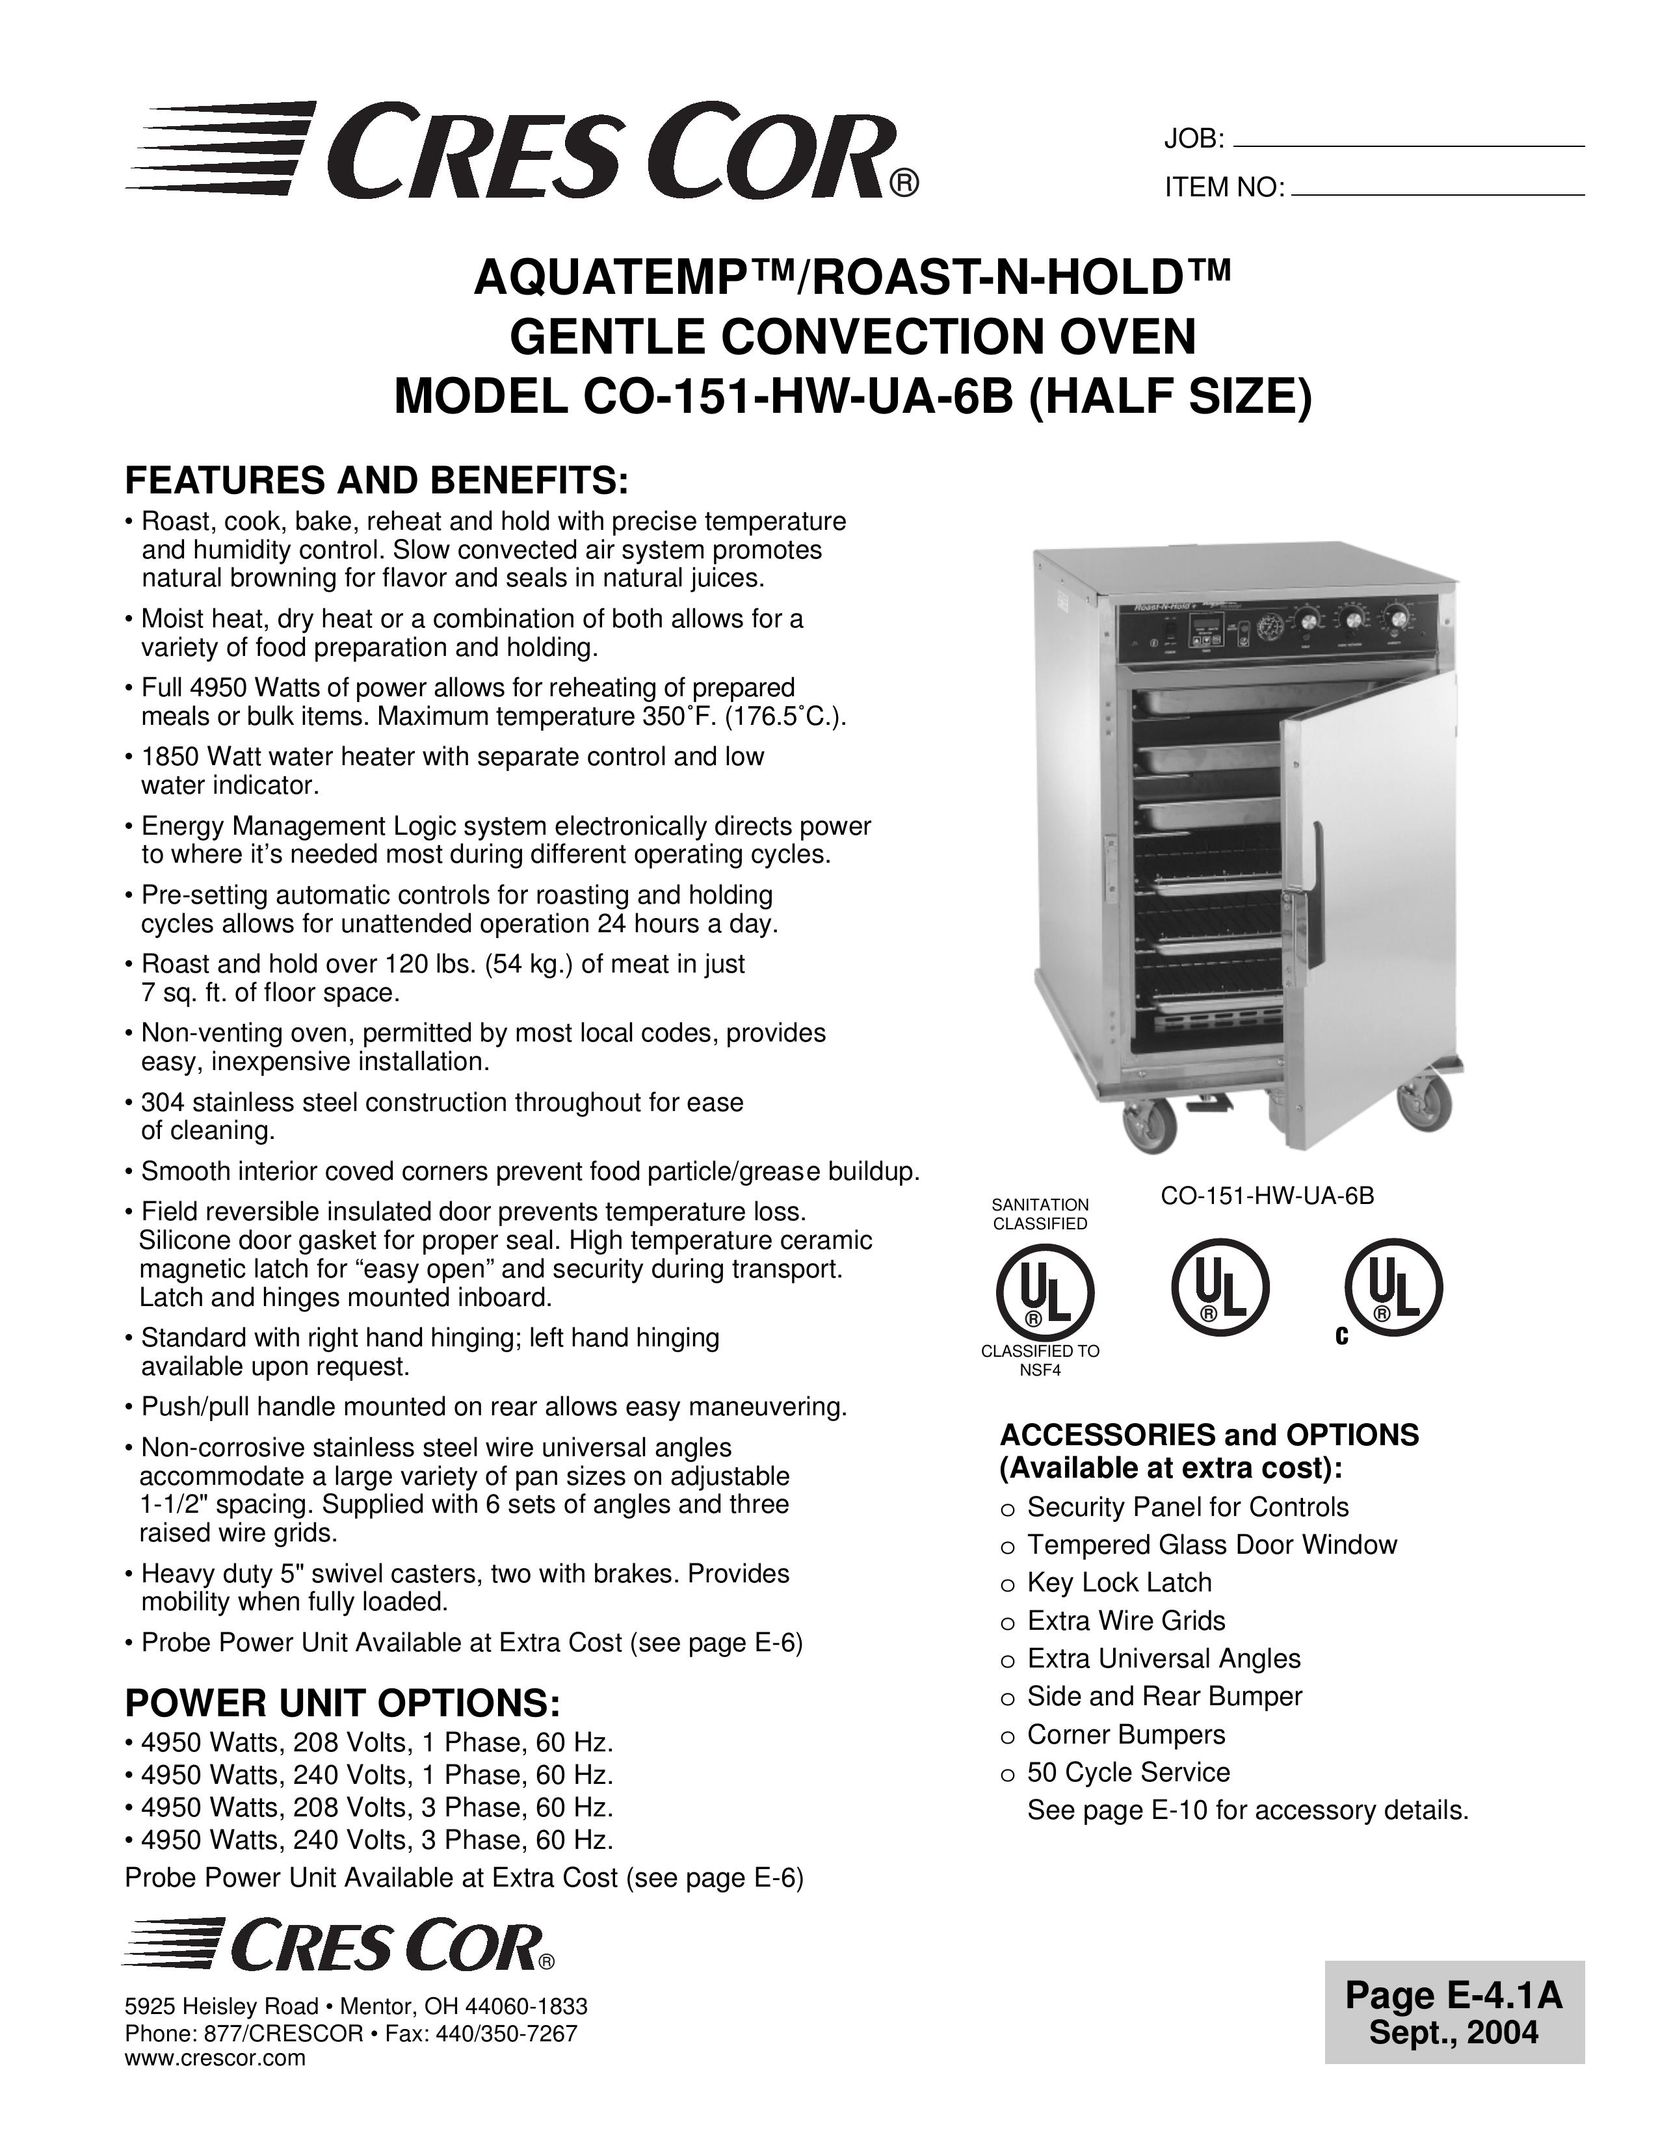 Cres Cor CO-151-HW-UA-6B Convection Oven User Manual